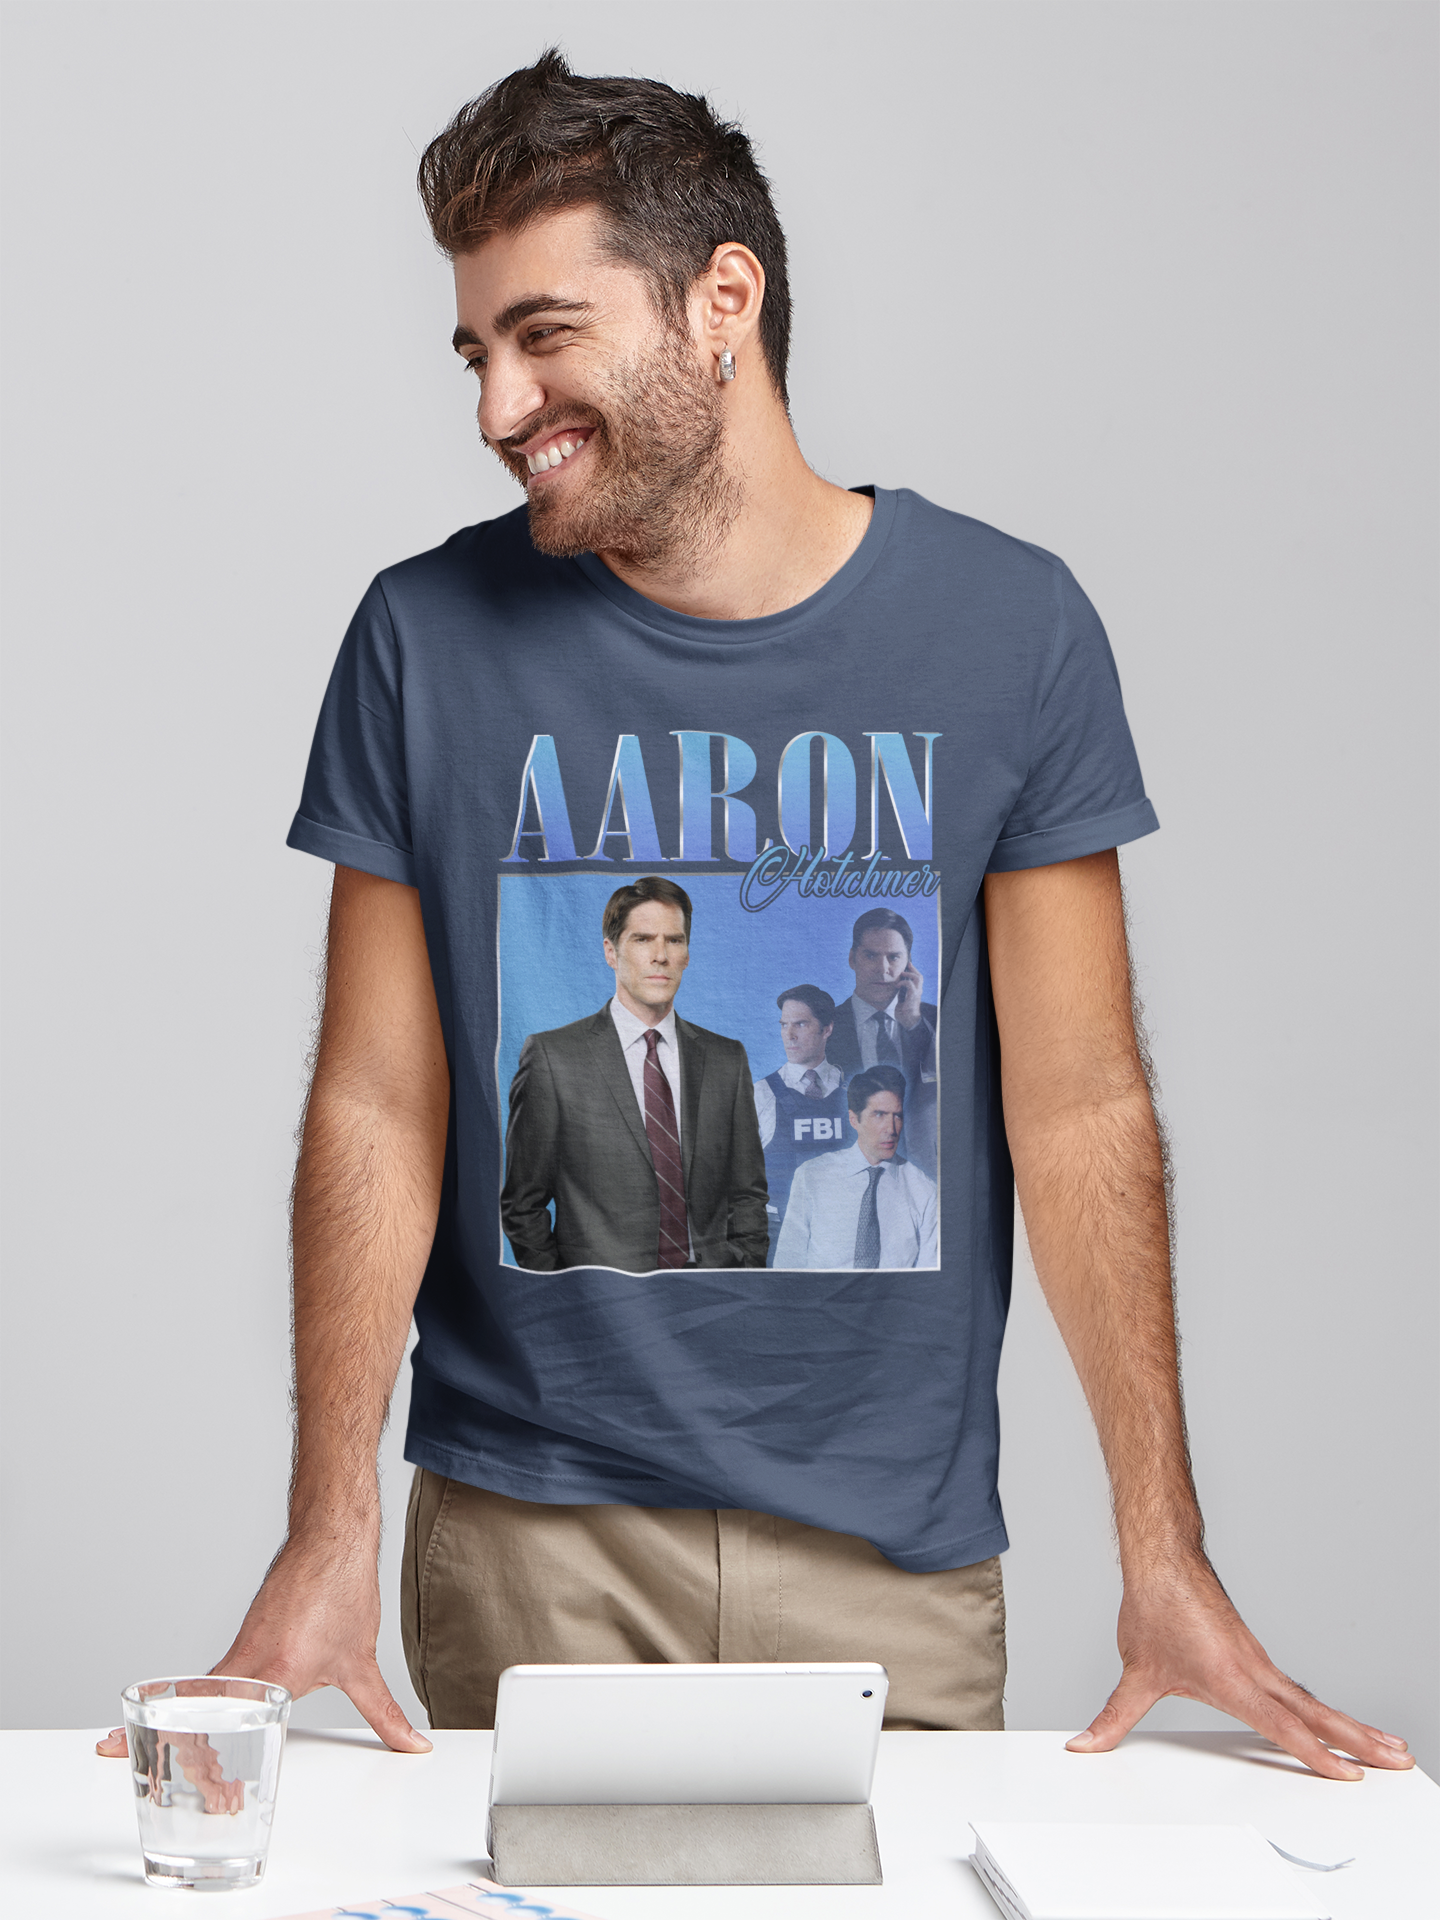 Criminal Minds T Shirt, Aaron Hotchner T Shirt